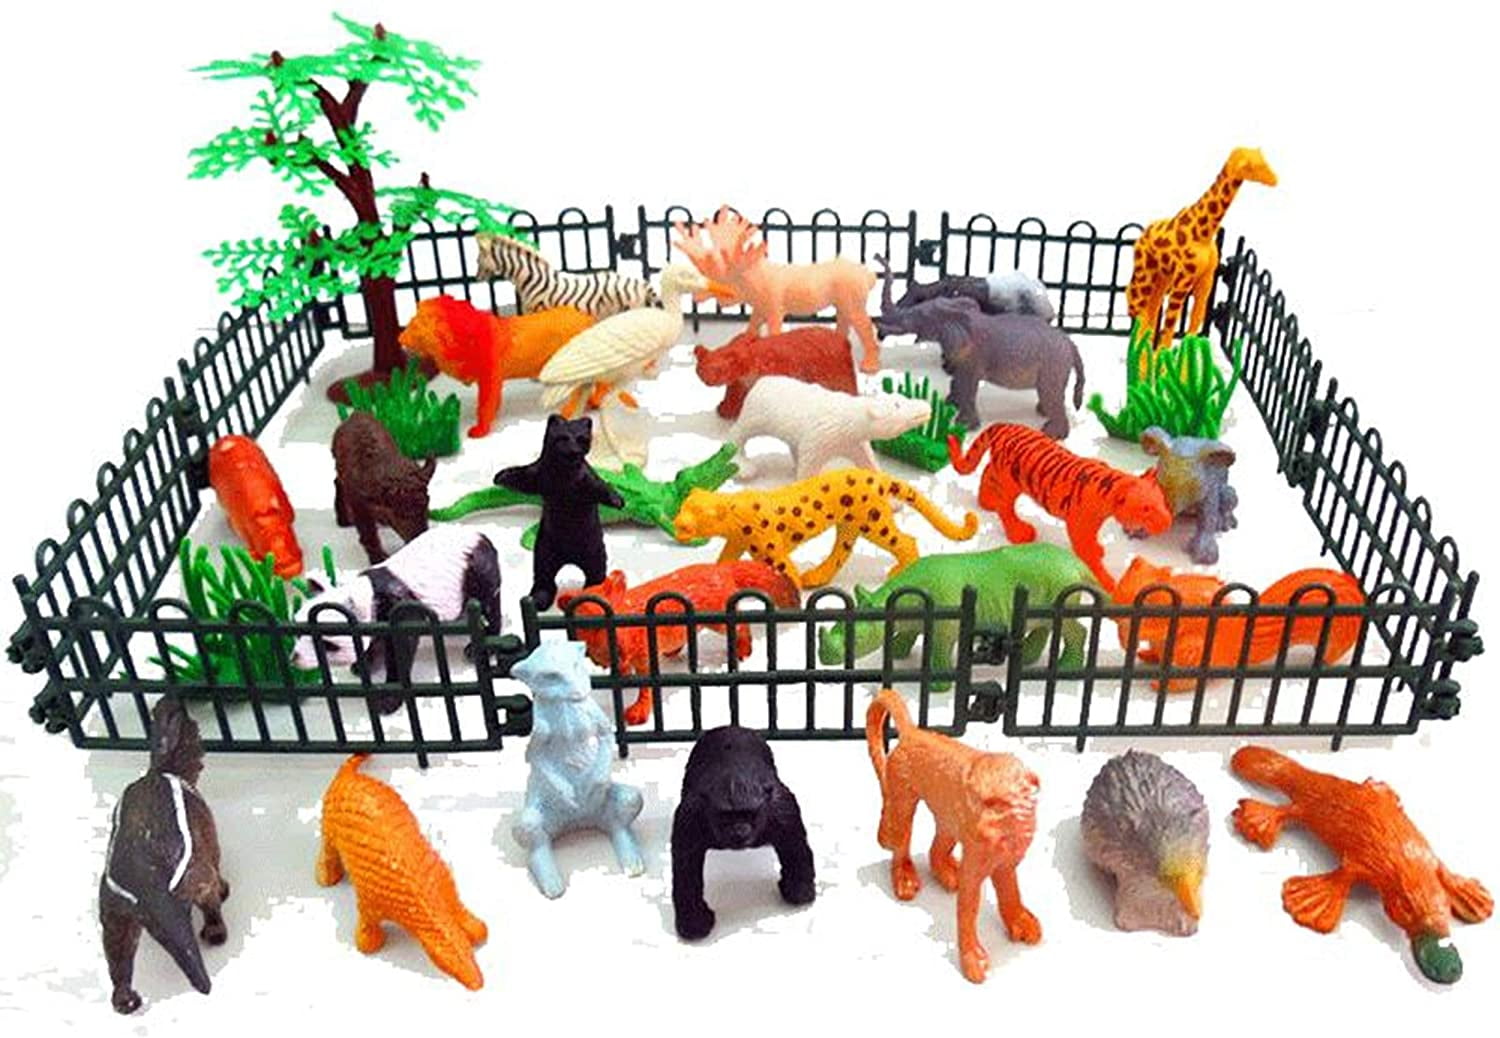 Realistic Large Wild Zoo Animals Figurines Jumbo Safari Animals Figures... NEW 